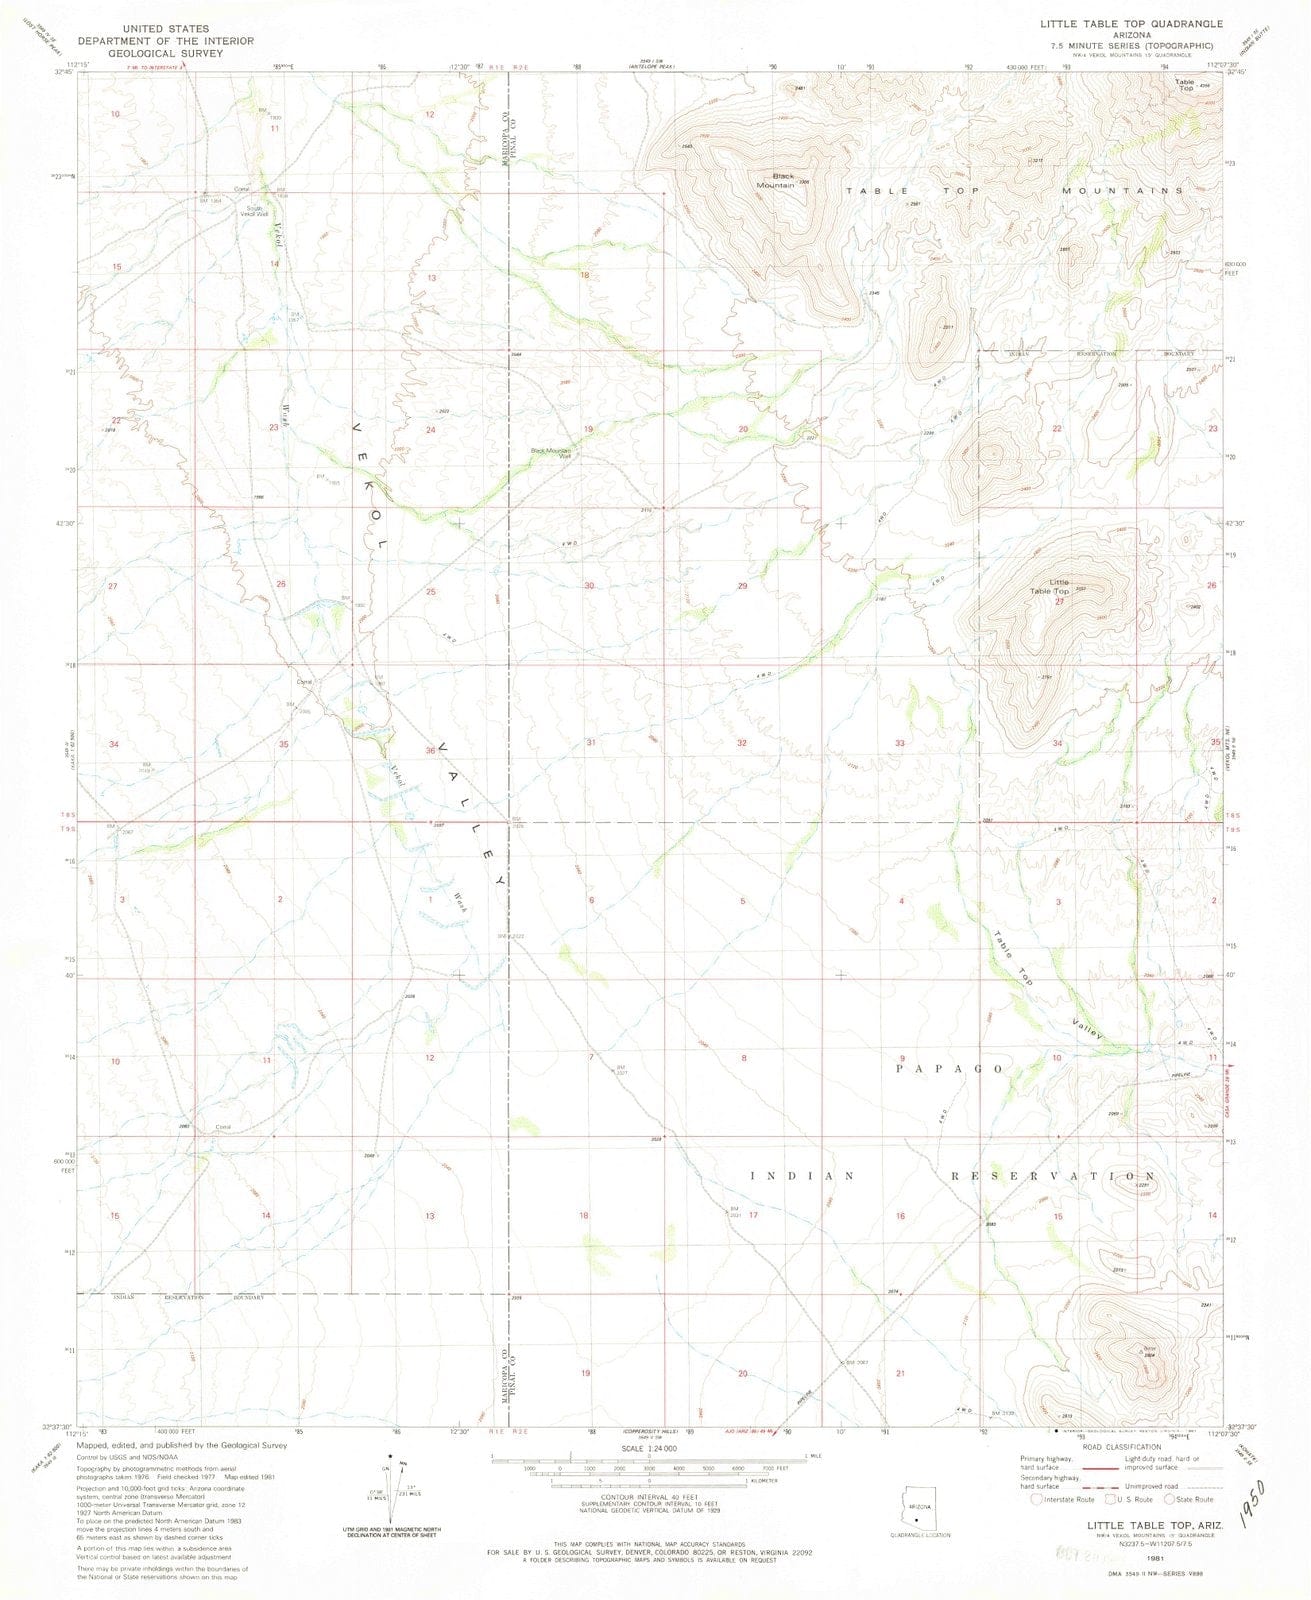 1981 Little Table Top, AZ - Arizona - USGS Topographic Map